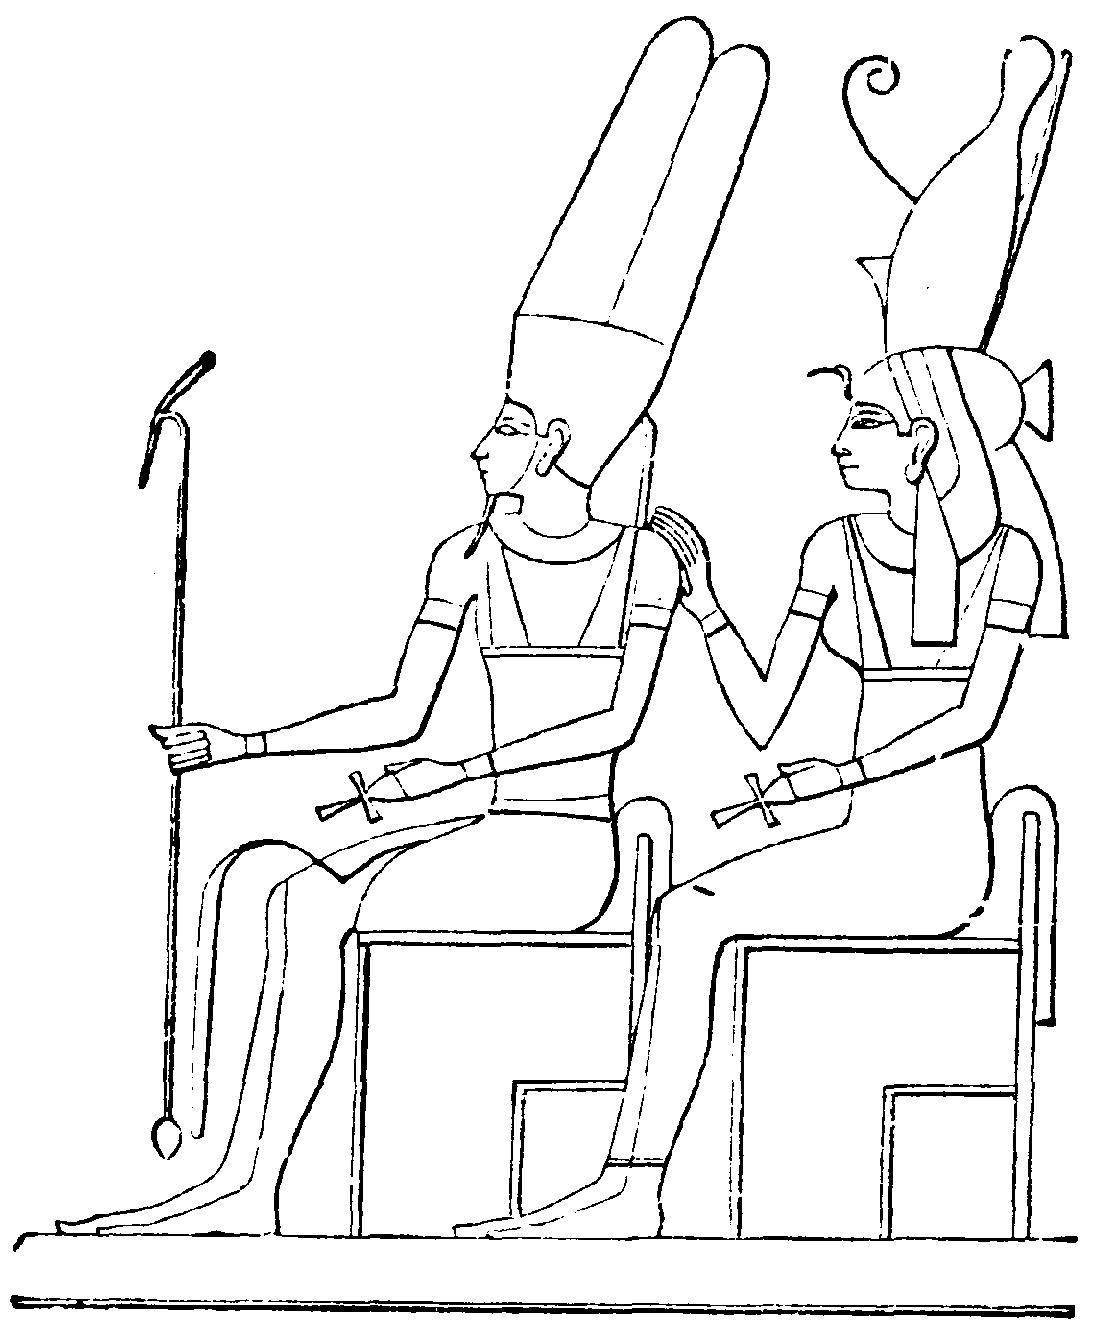 Название: Раскраска Рисунок фараона. Категория: Египет. Теги: Египет.